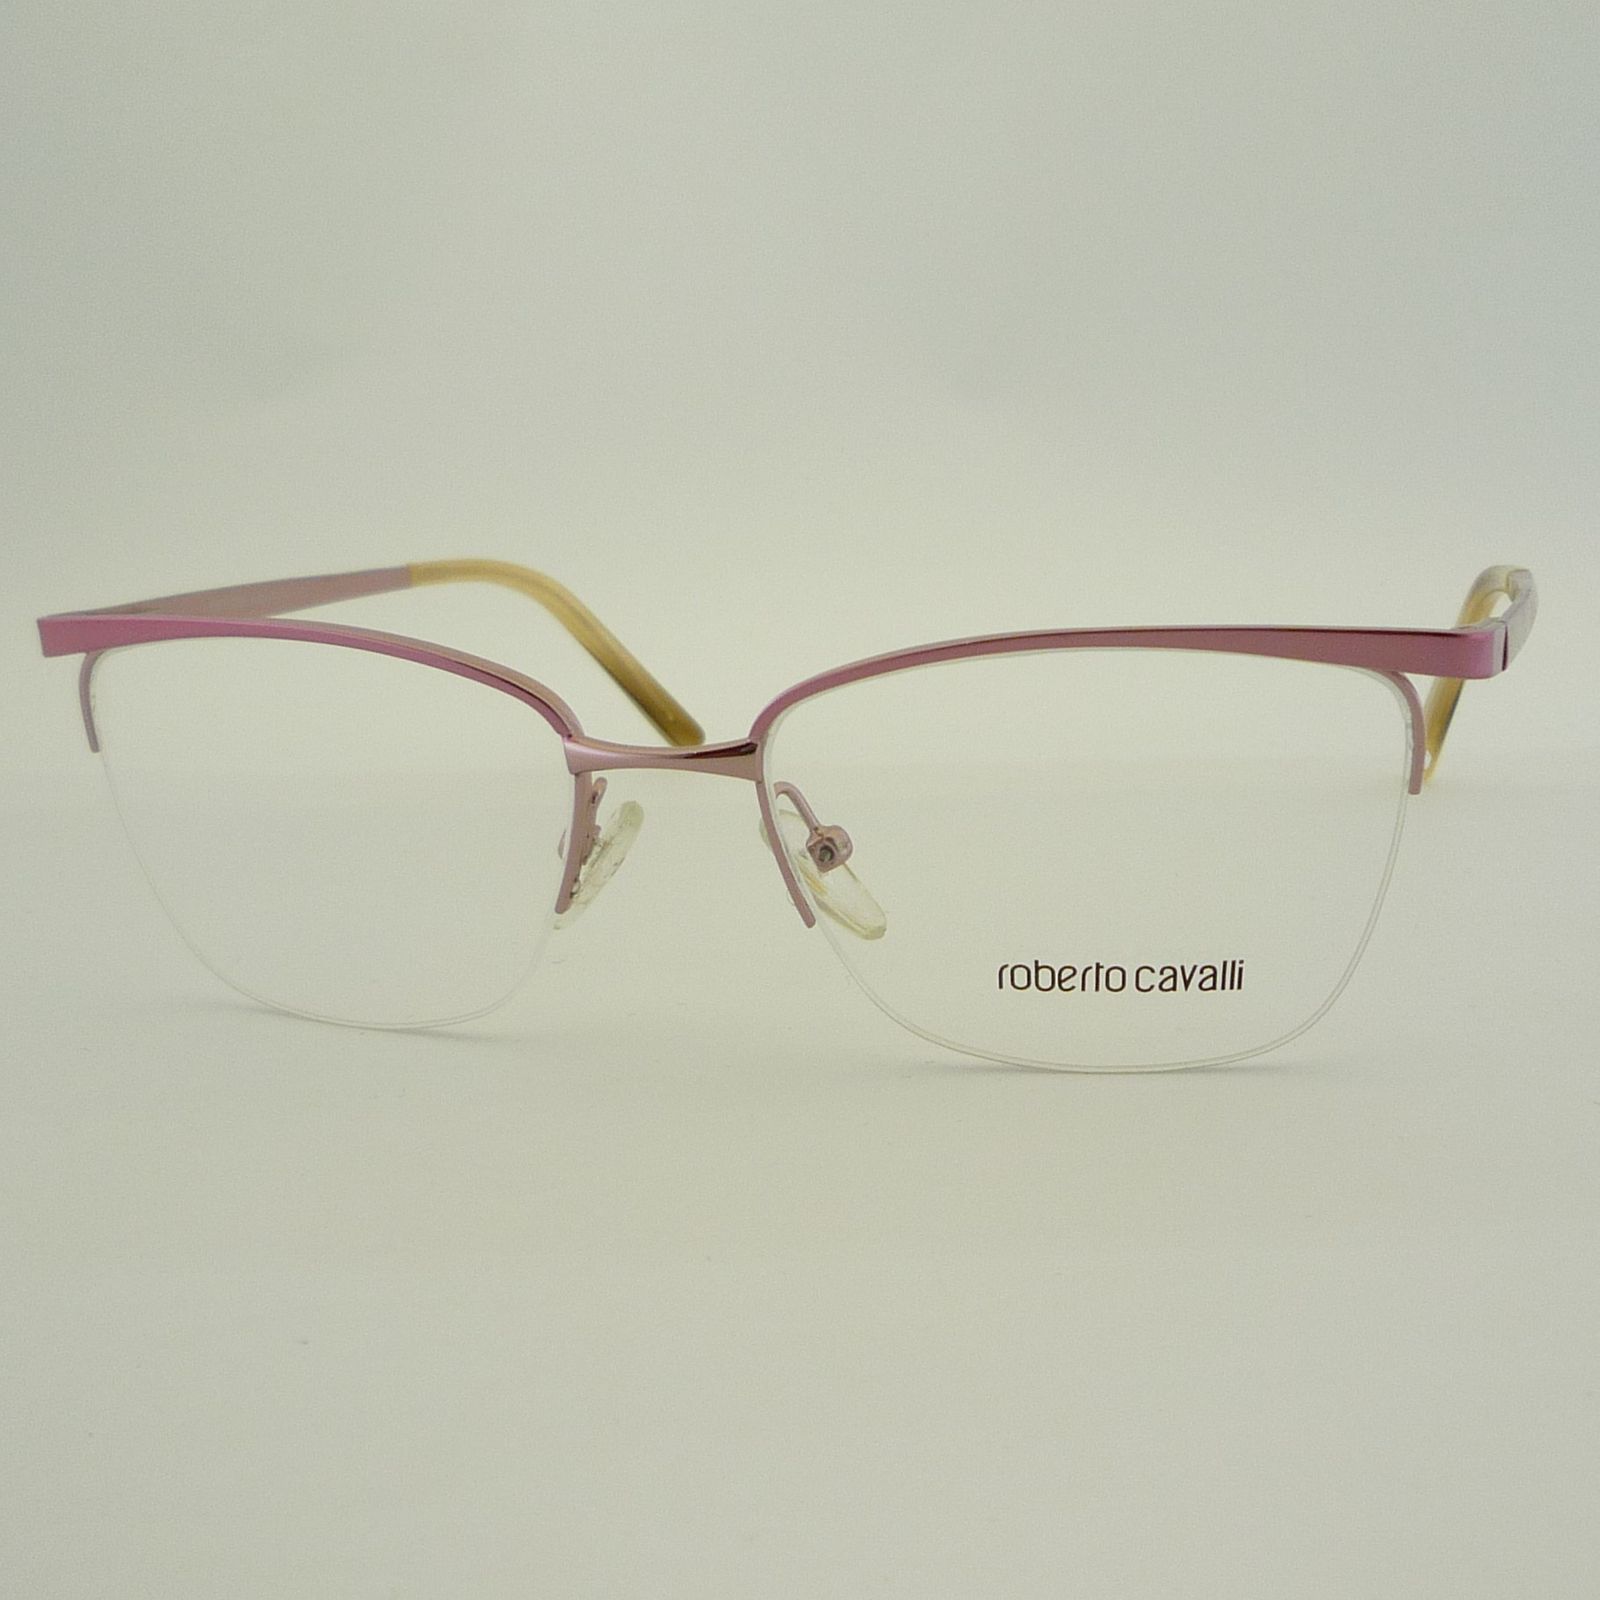 فریم عینک طبی زنانه روبرتو کاوالی مدل 6581c6 -  - 3